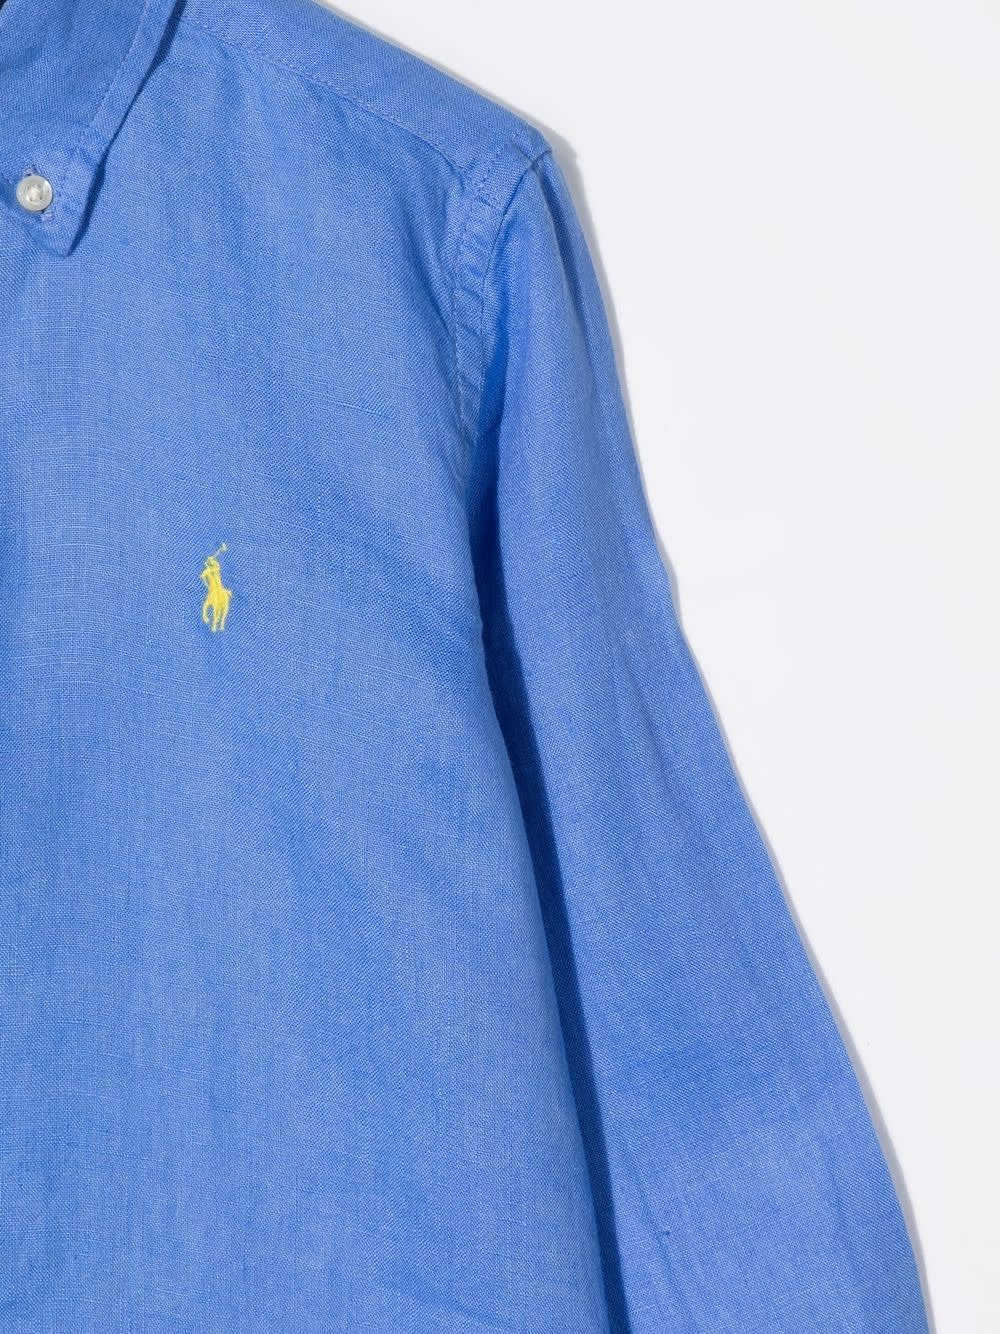 Shop Ralph Lauren Blue Linen Shirt With Embroidered Pony